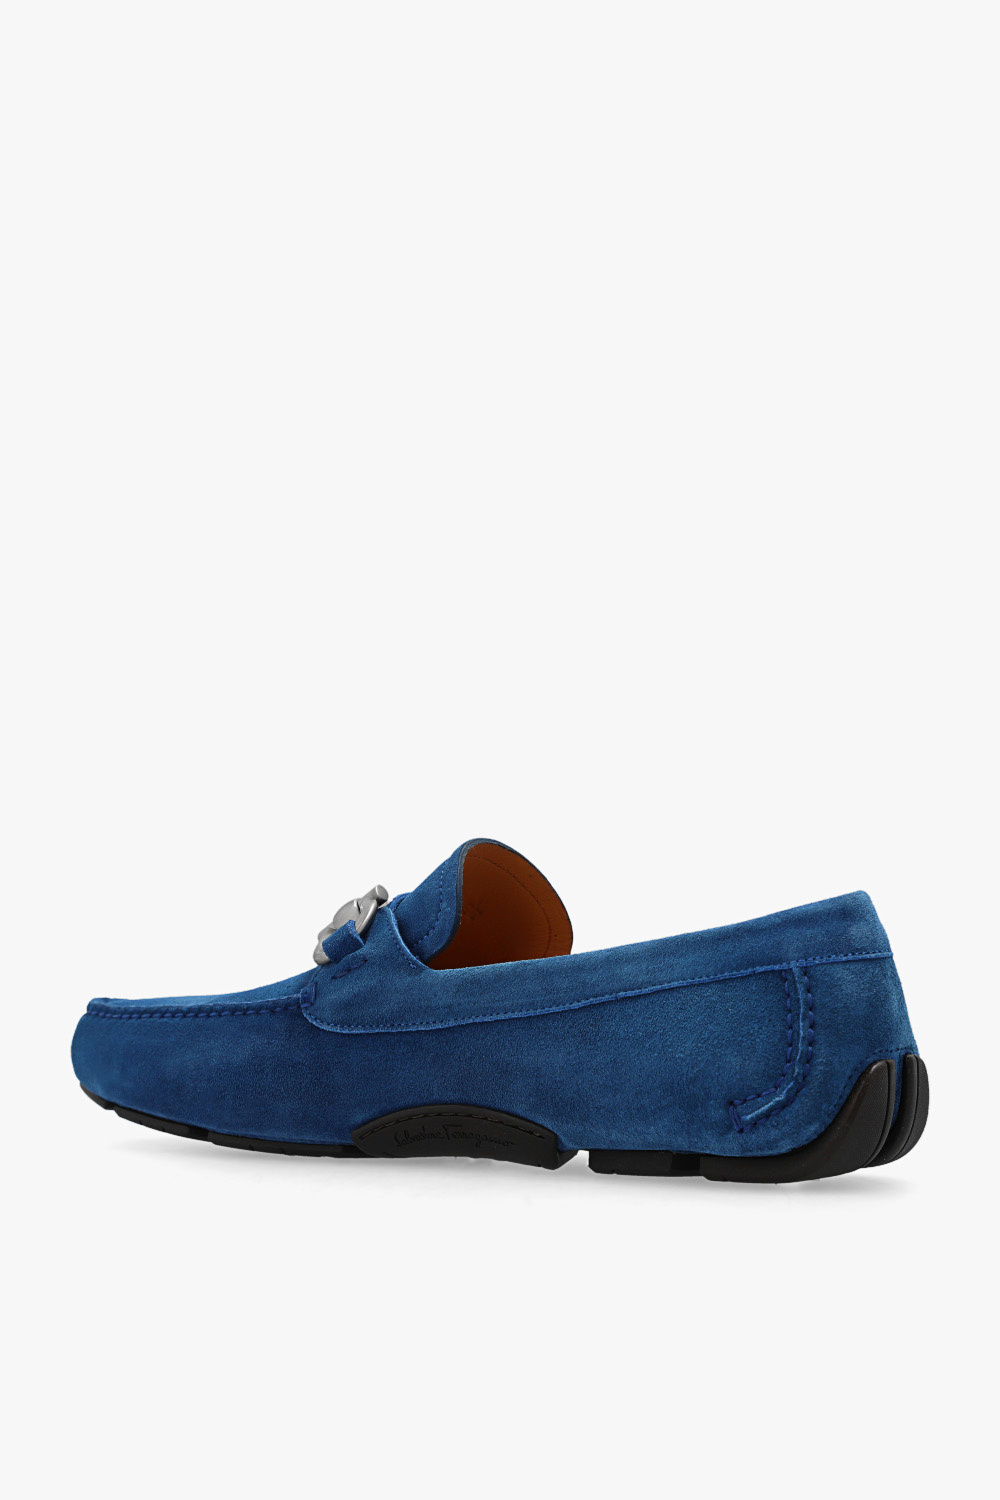 FERRAGAMO ‘Parigi’ leather Hakon shoes